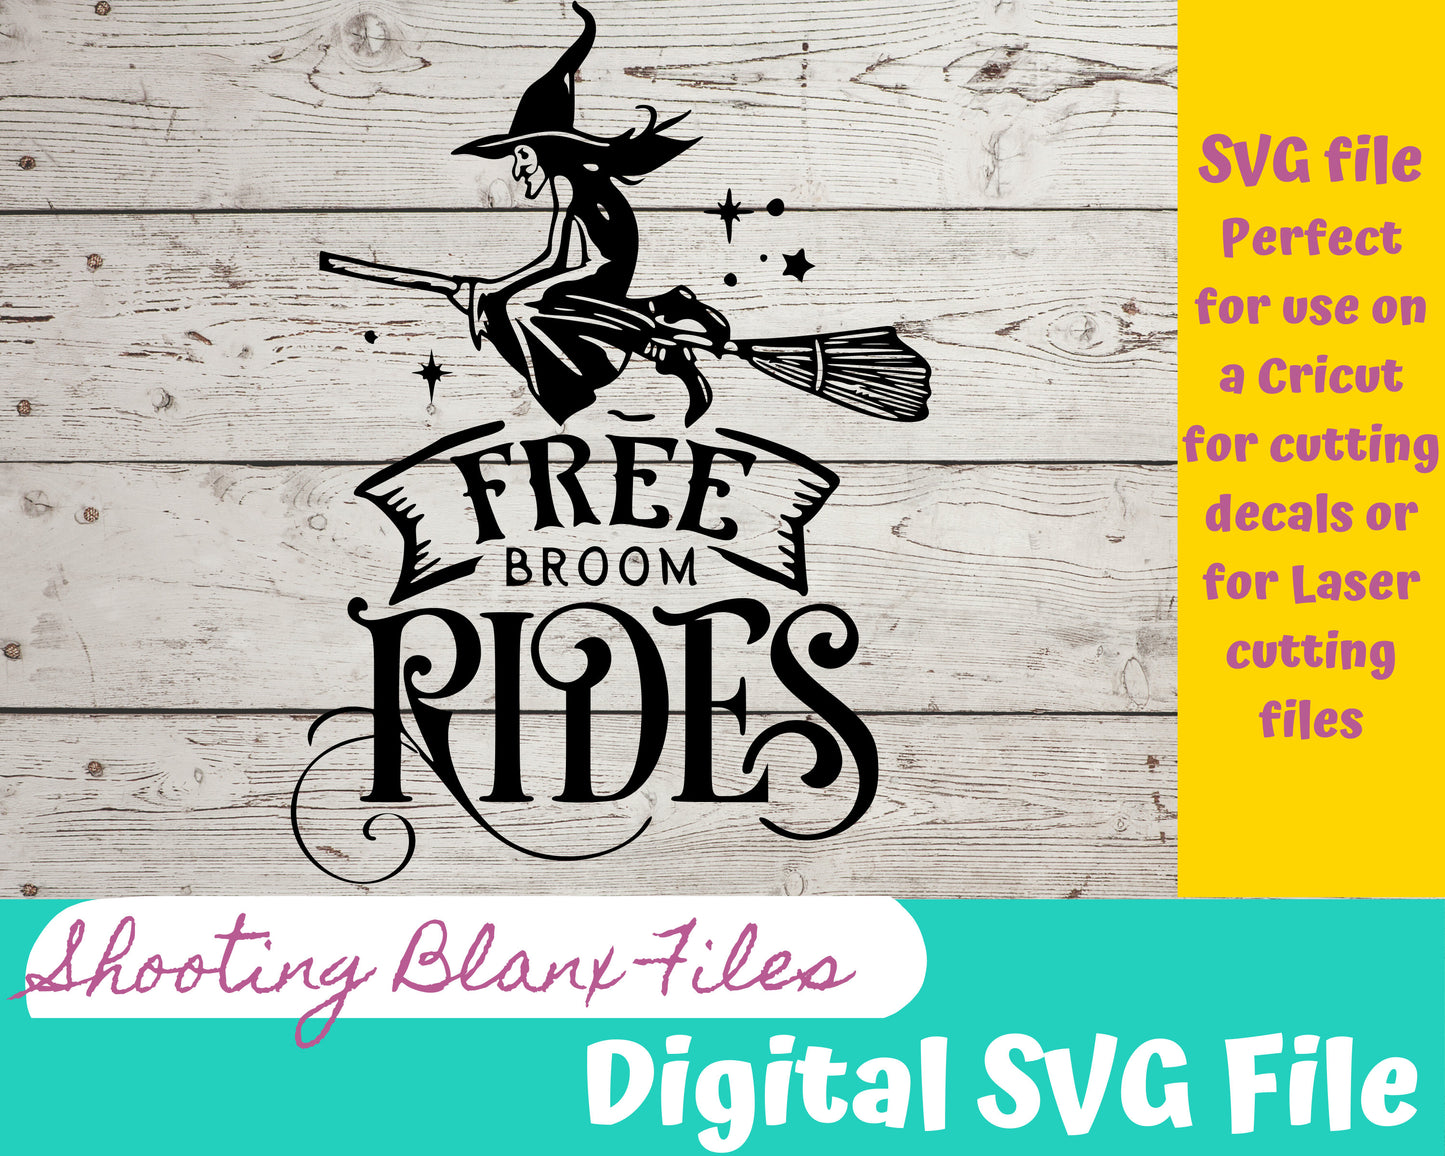 Free Broom Rides SVG file for Cricut - laser engraving Glowforge, Scary, Halloween, Minimalistic, Halloween, Horror, phrase, saying